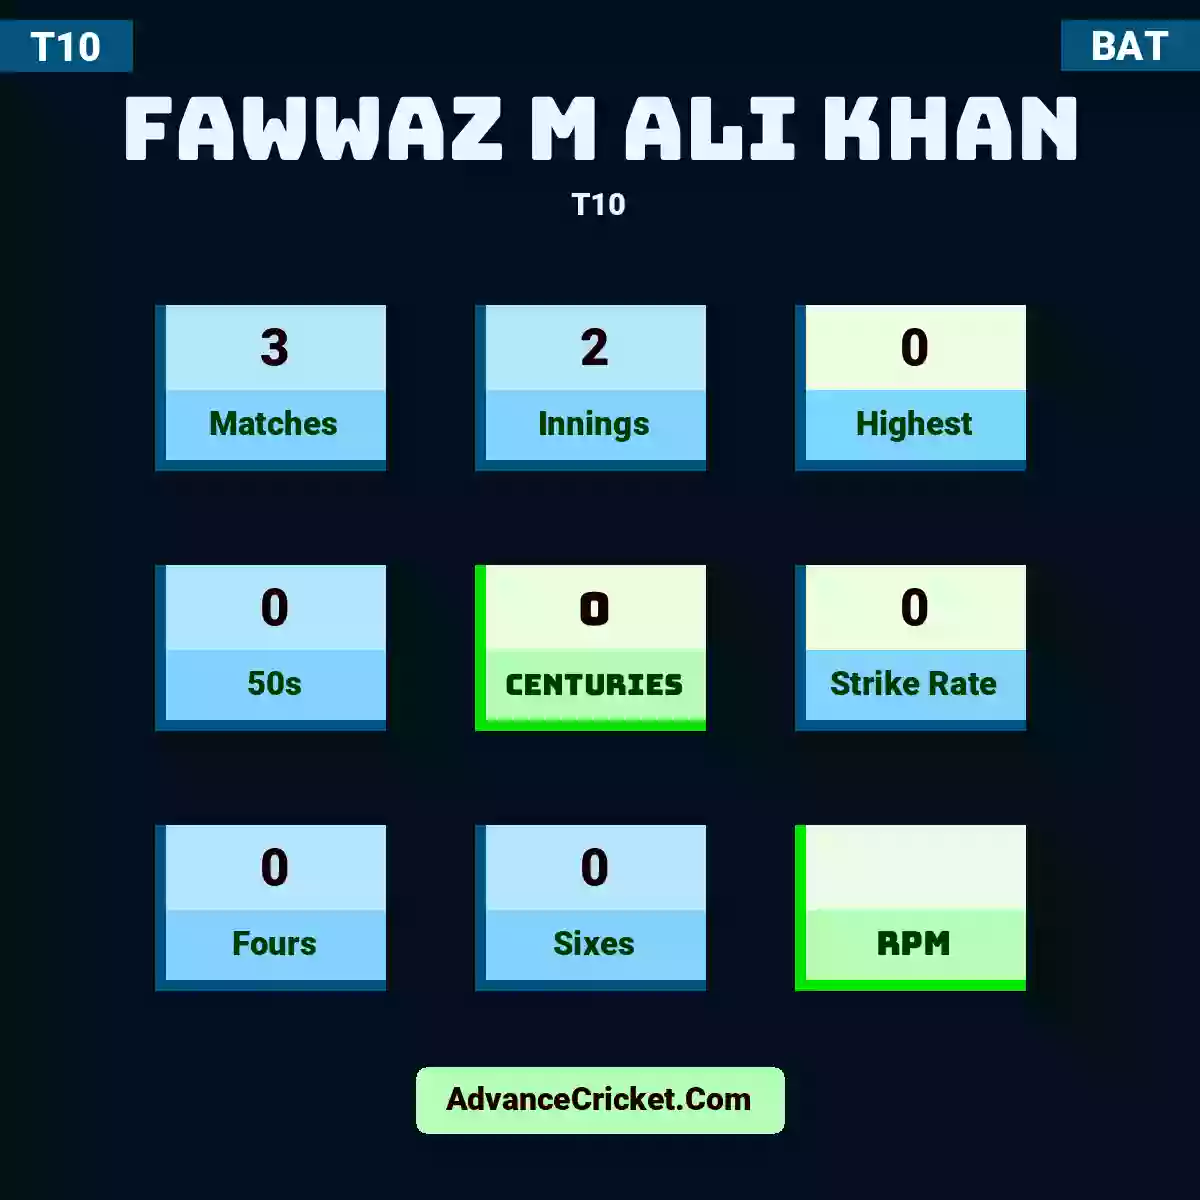 Fawwaz M Ali Khan T10 , Fawwaz M Ali Khan played 3 matches, scored 0 runs as highest, 0 half-centuries, and 0 centuries, with a strike rate of 0. F.M.Ali.Khan hit 0 fours and 0 sixes.